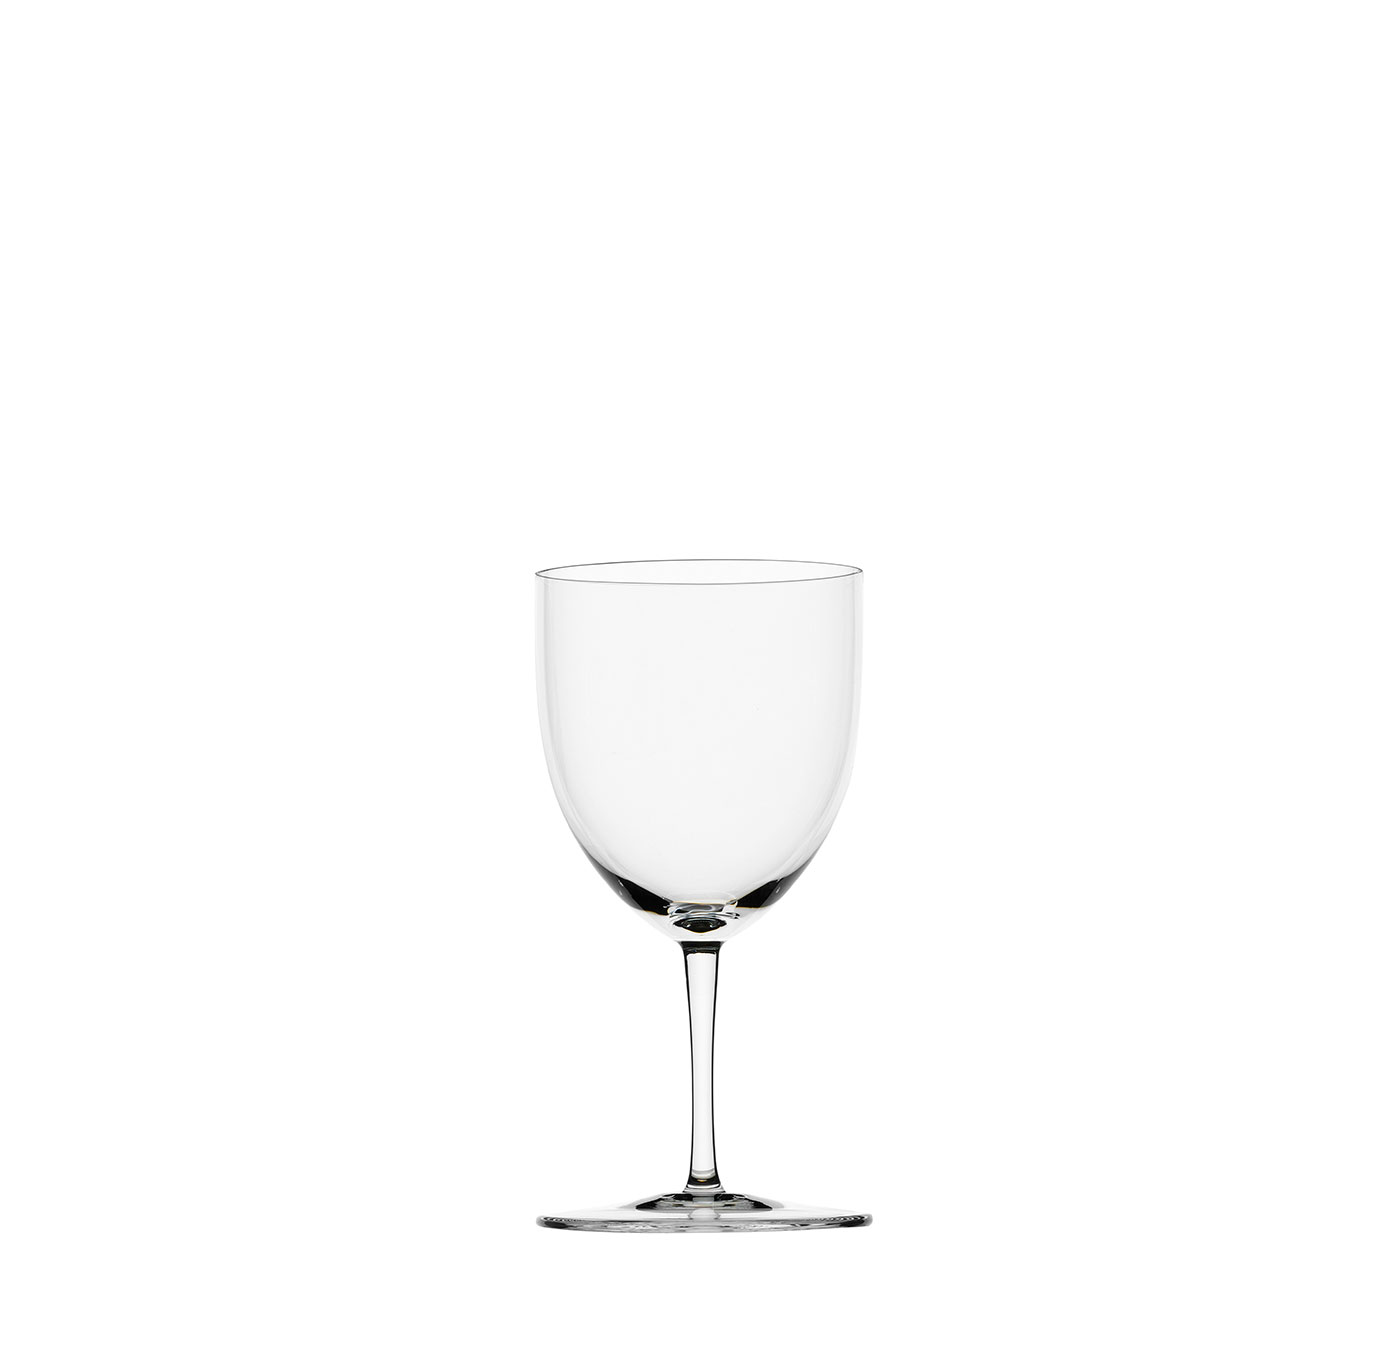 TS4GL Wine glass III.